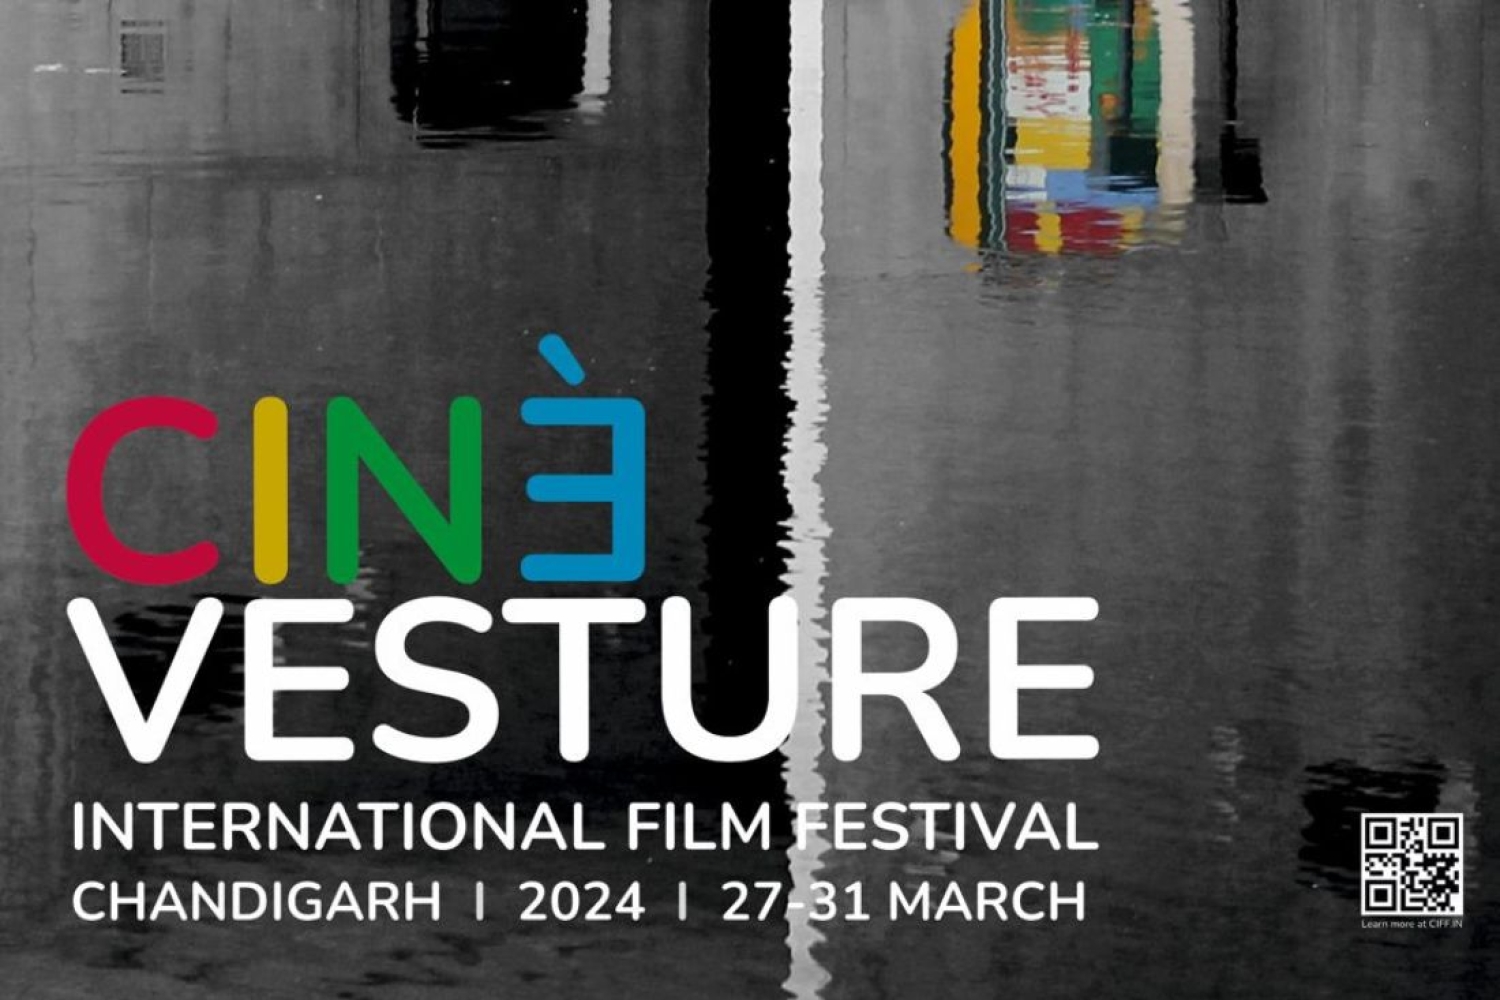 Cinevesture International Film Festival 